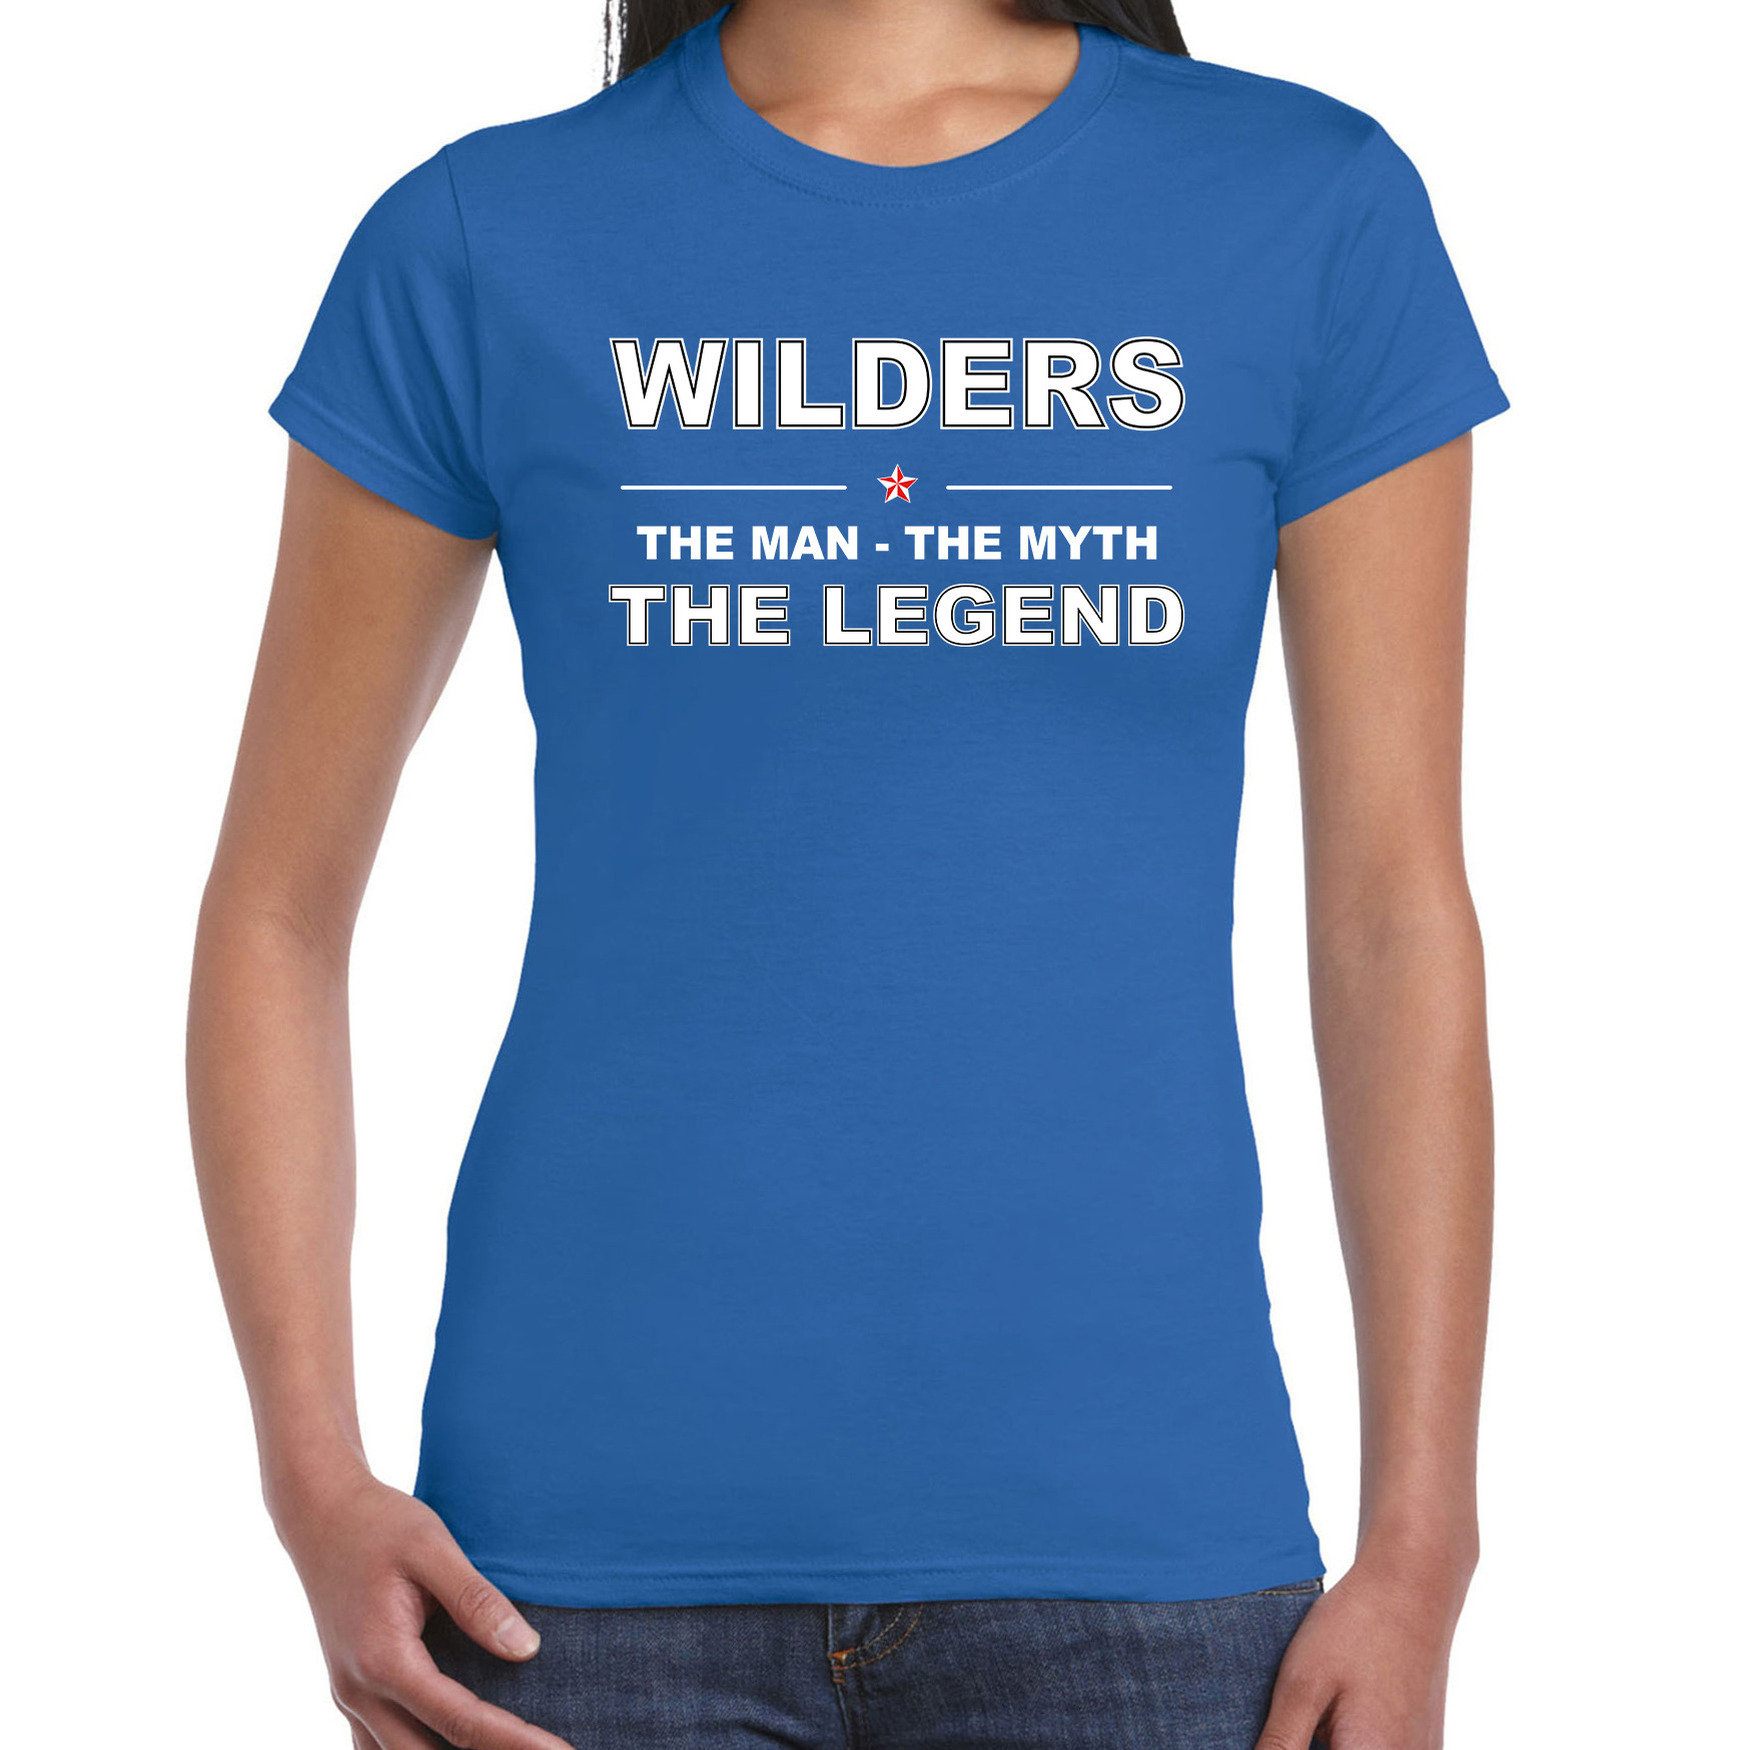 Wilders naam t-shirt the man-the myth-the legend blauw voor dames